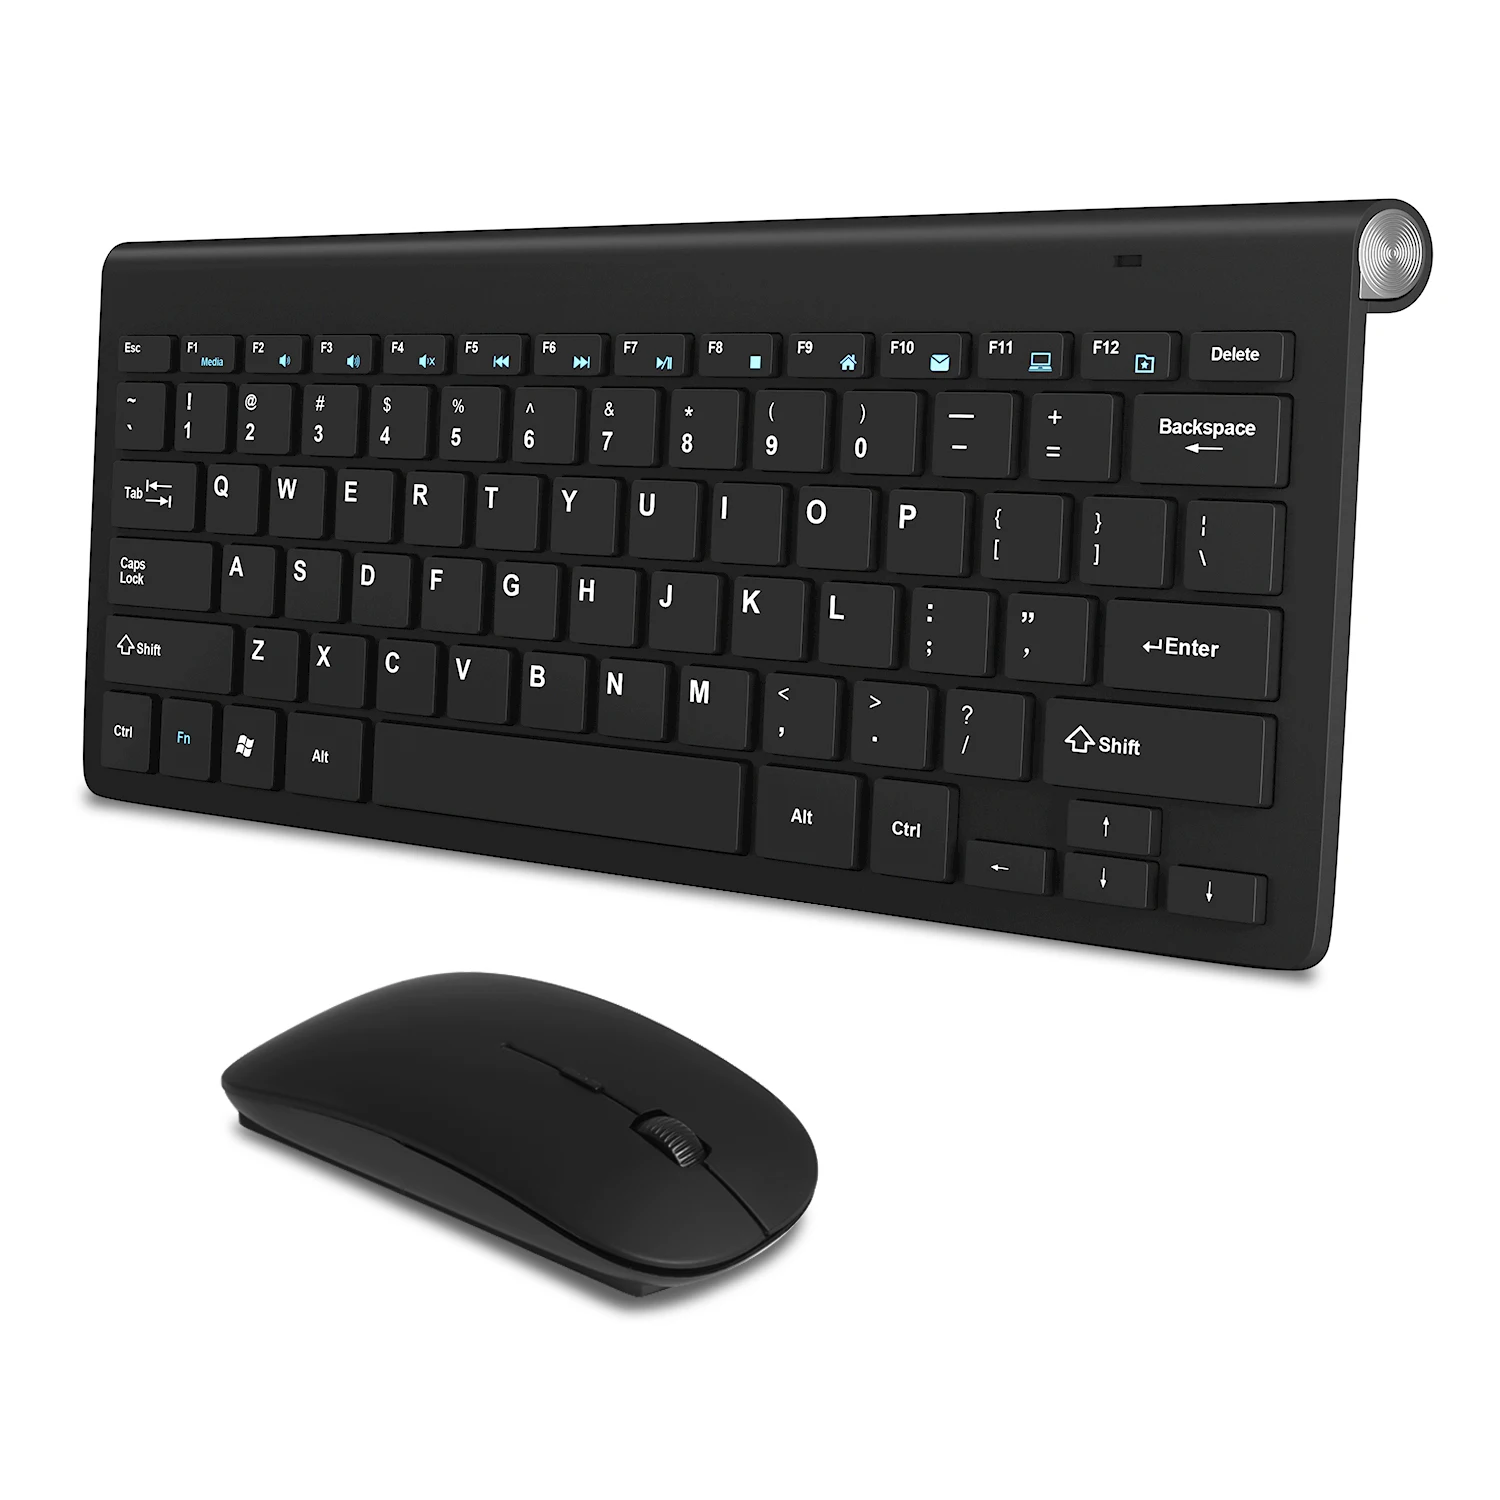 

Wireless Keyboard Mini USB Keyboard With Mouse Combo For PC laptop TV Computer Rubber keycaps Ergonomic Noiseless keyboard